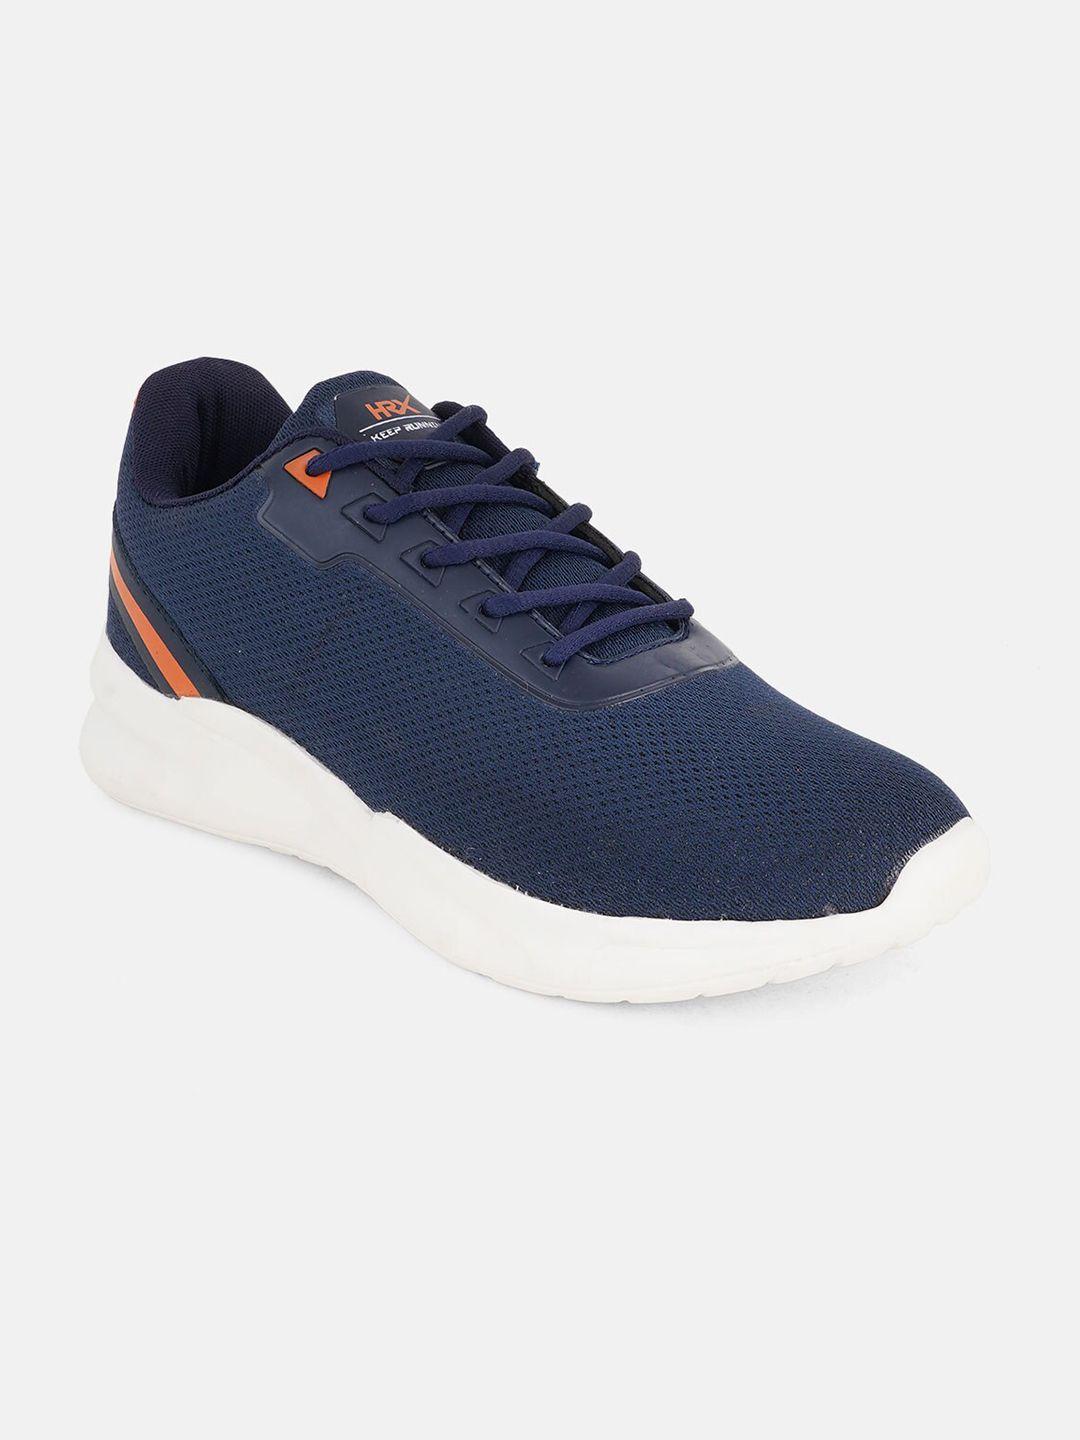 hrx by hrithik roshan men navy blue and orange mesh walking sports shoes